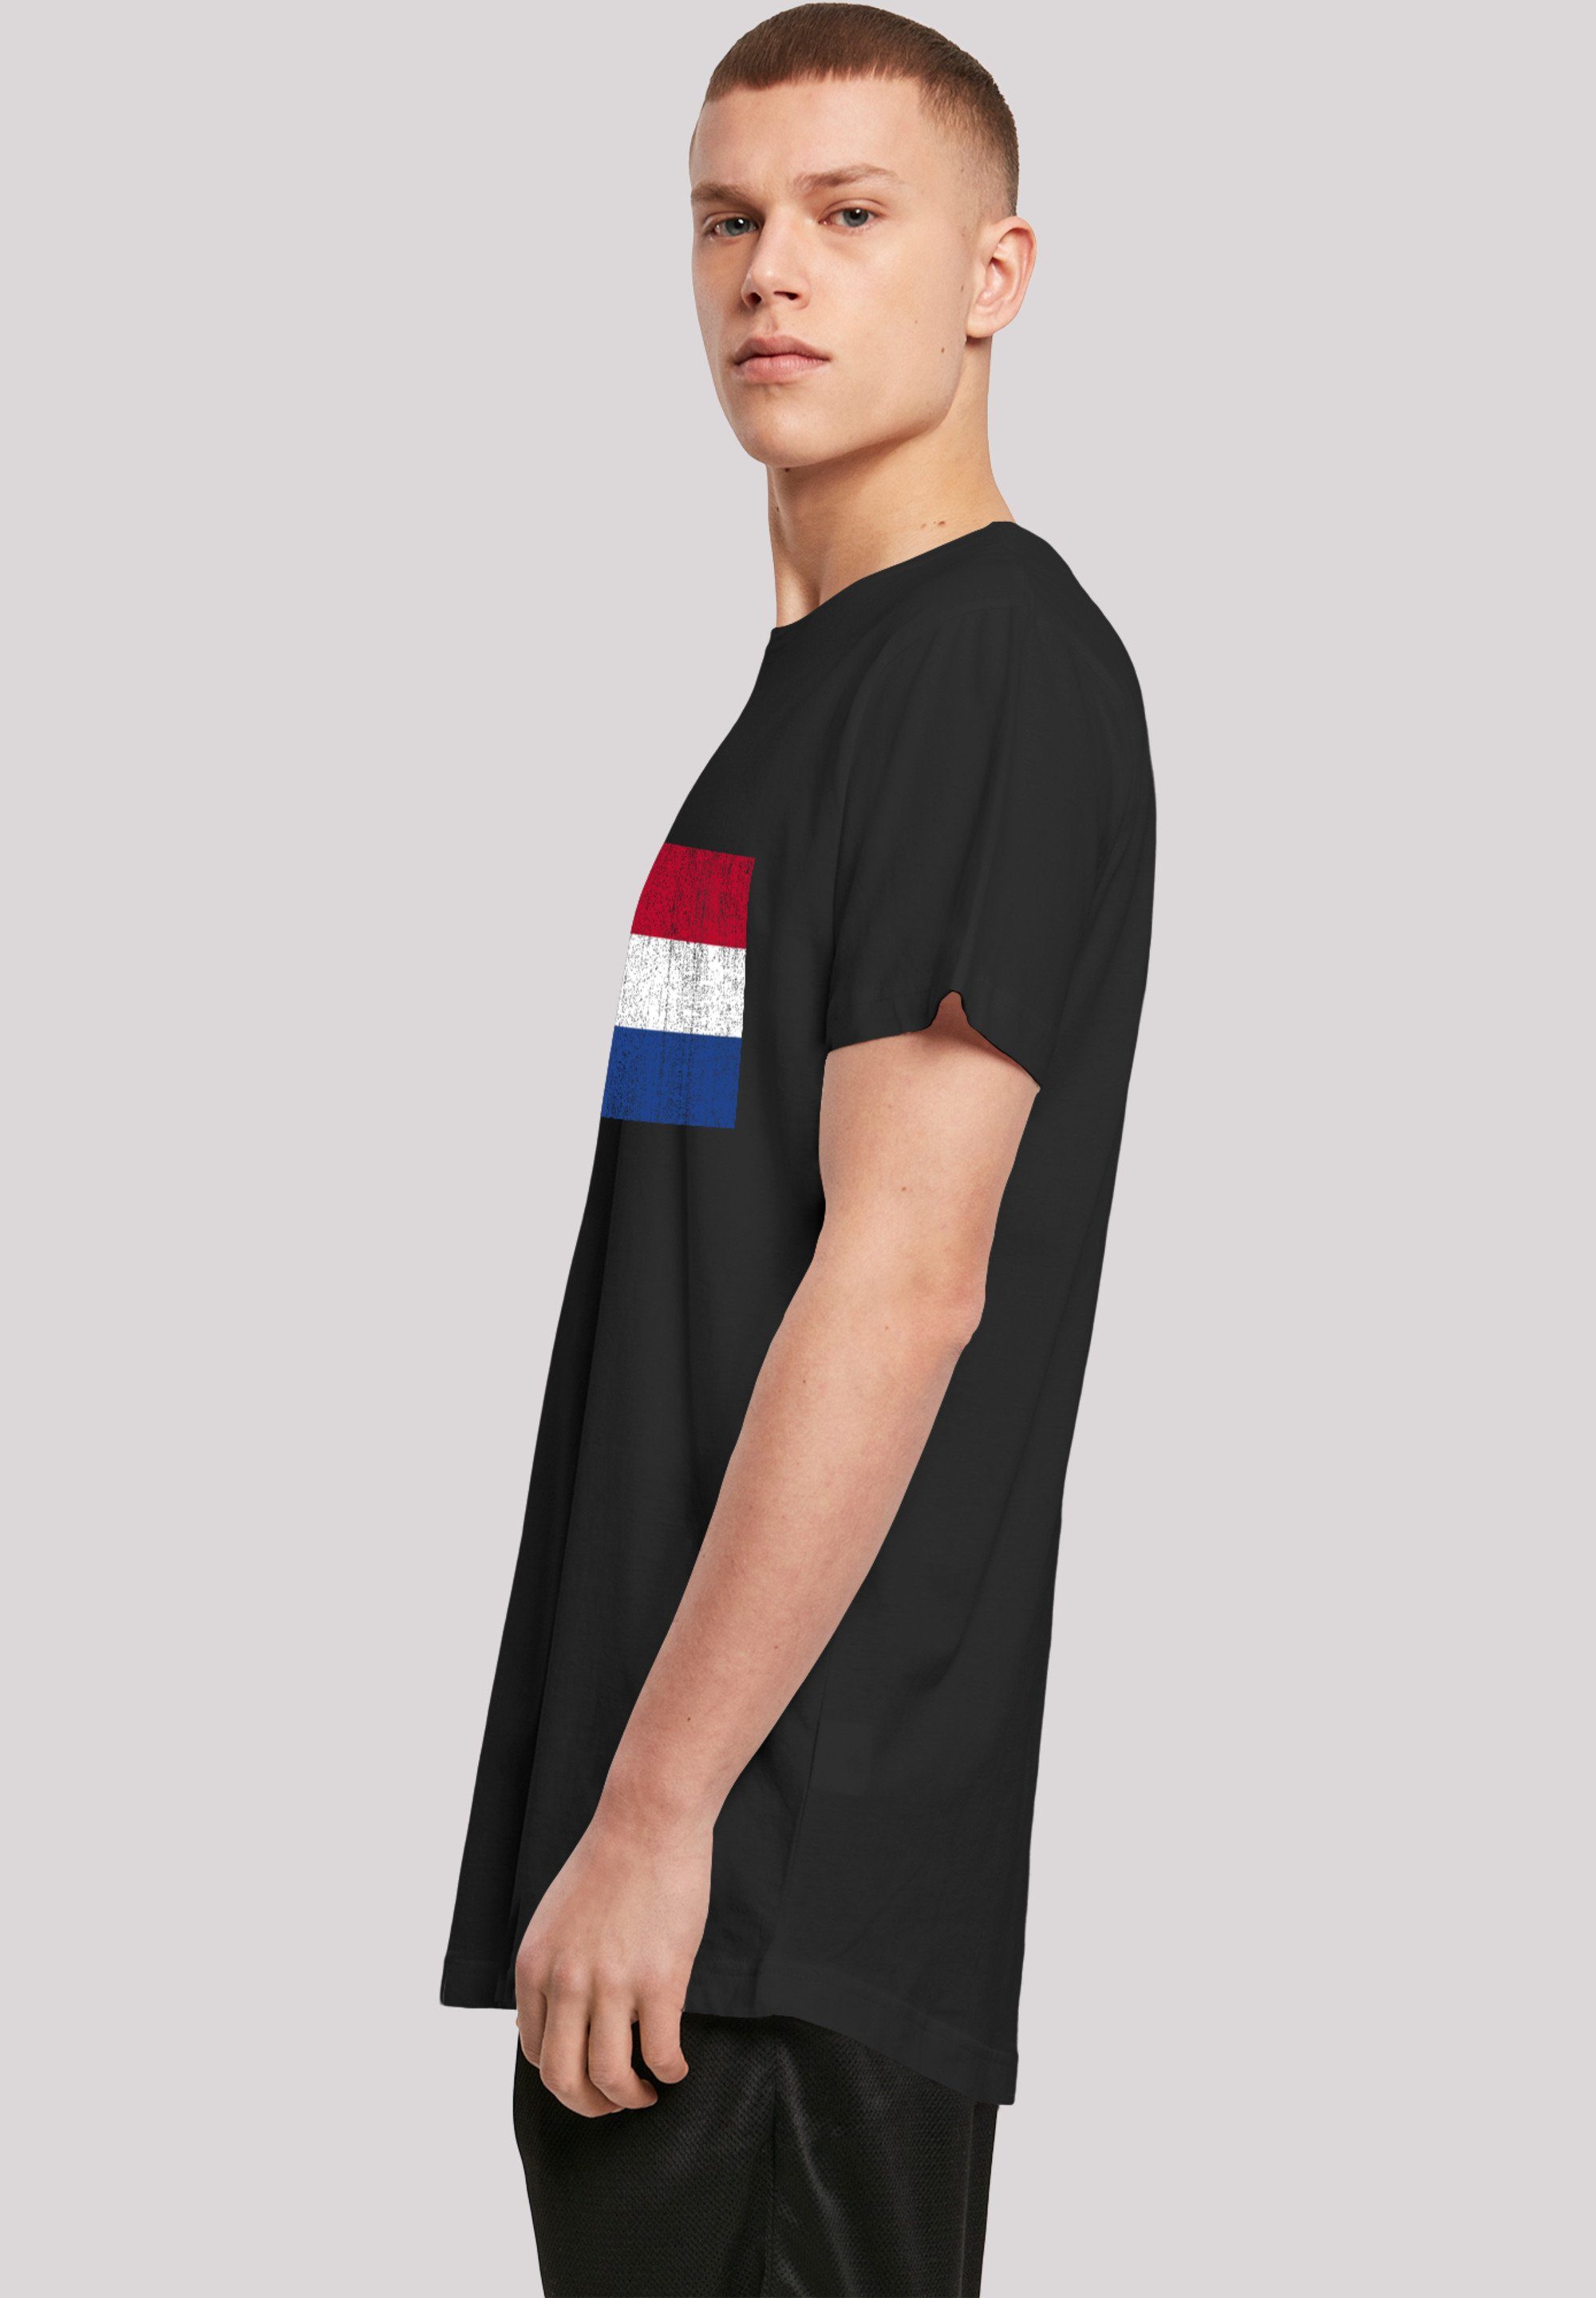 F4NT4STIC T-Shirt Netherlands NIederlande Holland Print schwarz distressed Flagge